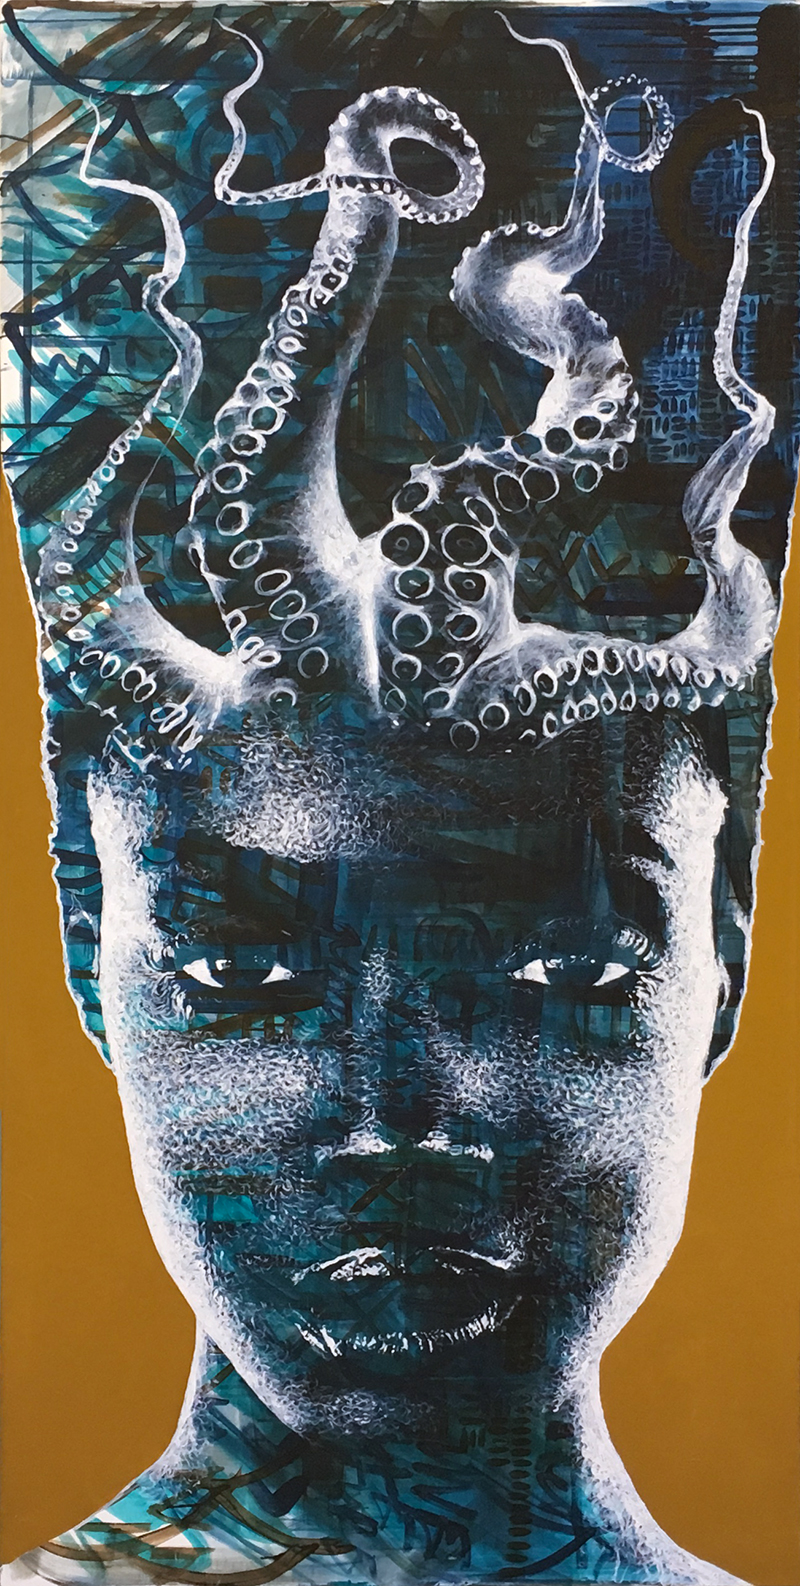 "OctopusIV" acrylic painting on canvas 100x200cm / august 2019